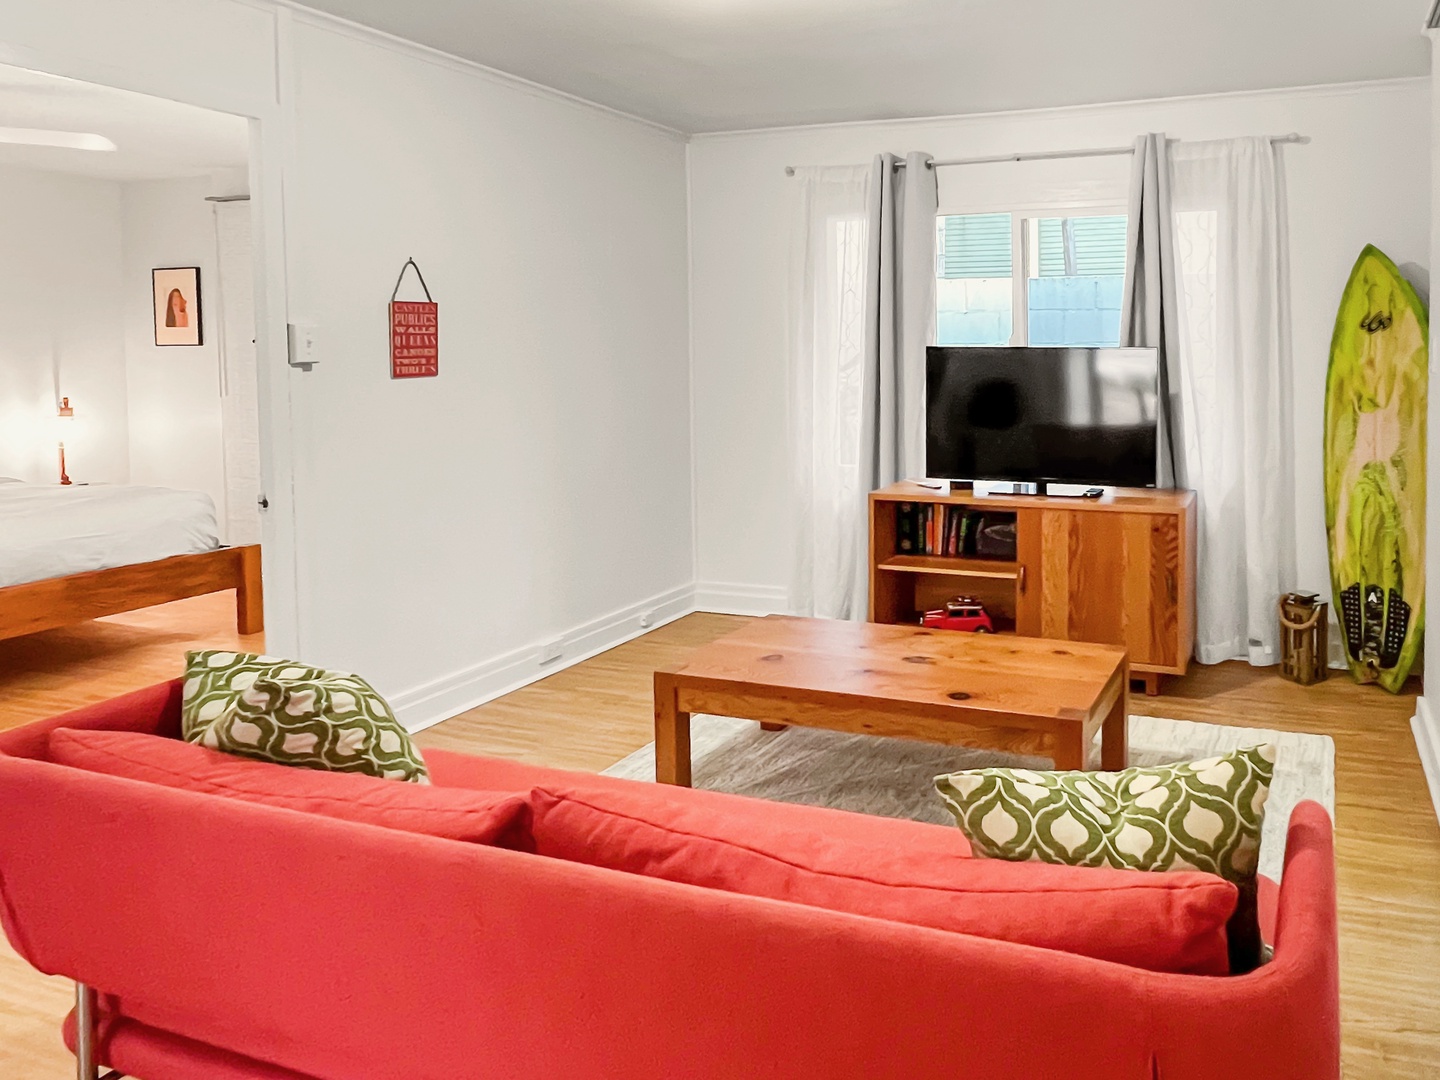 Honolulu Vacation Rentals, Ho'okipa Villa - Guest cottage living room with sleeper sofa